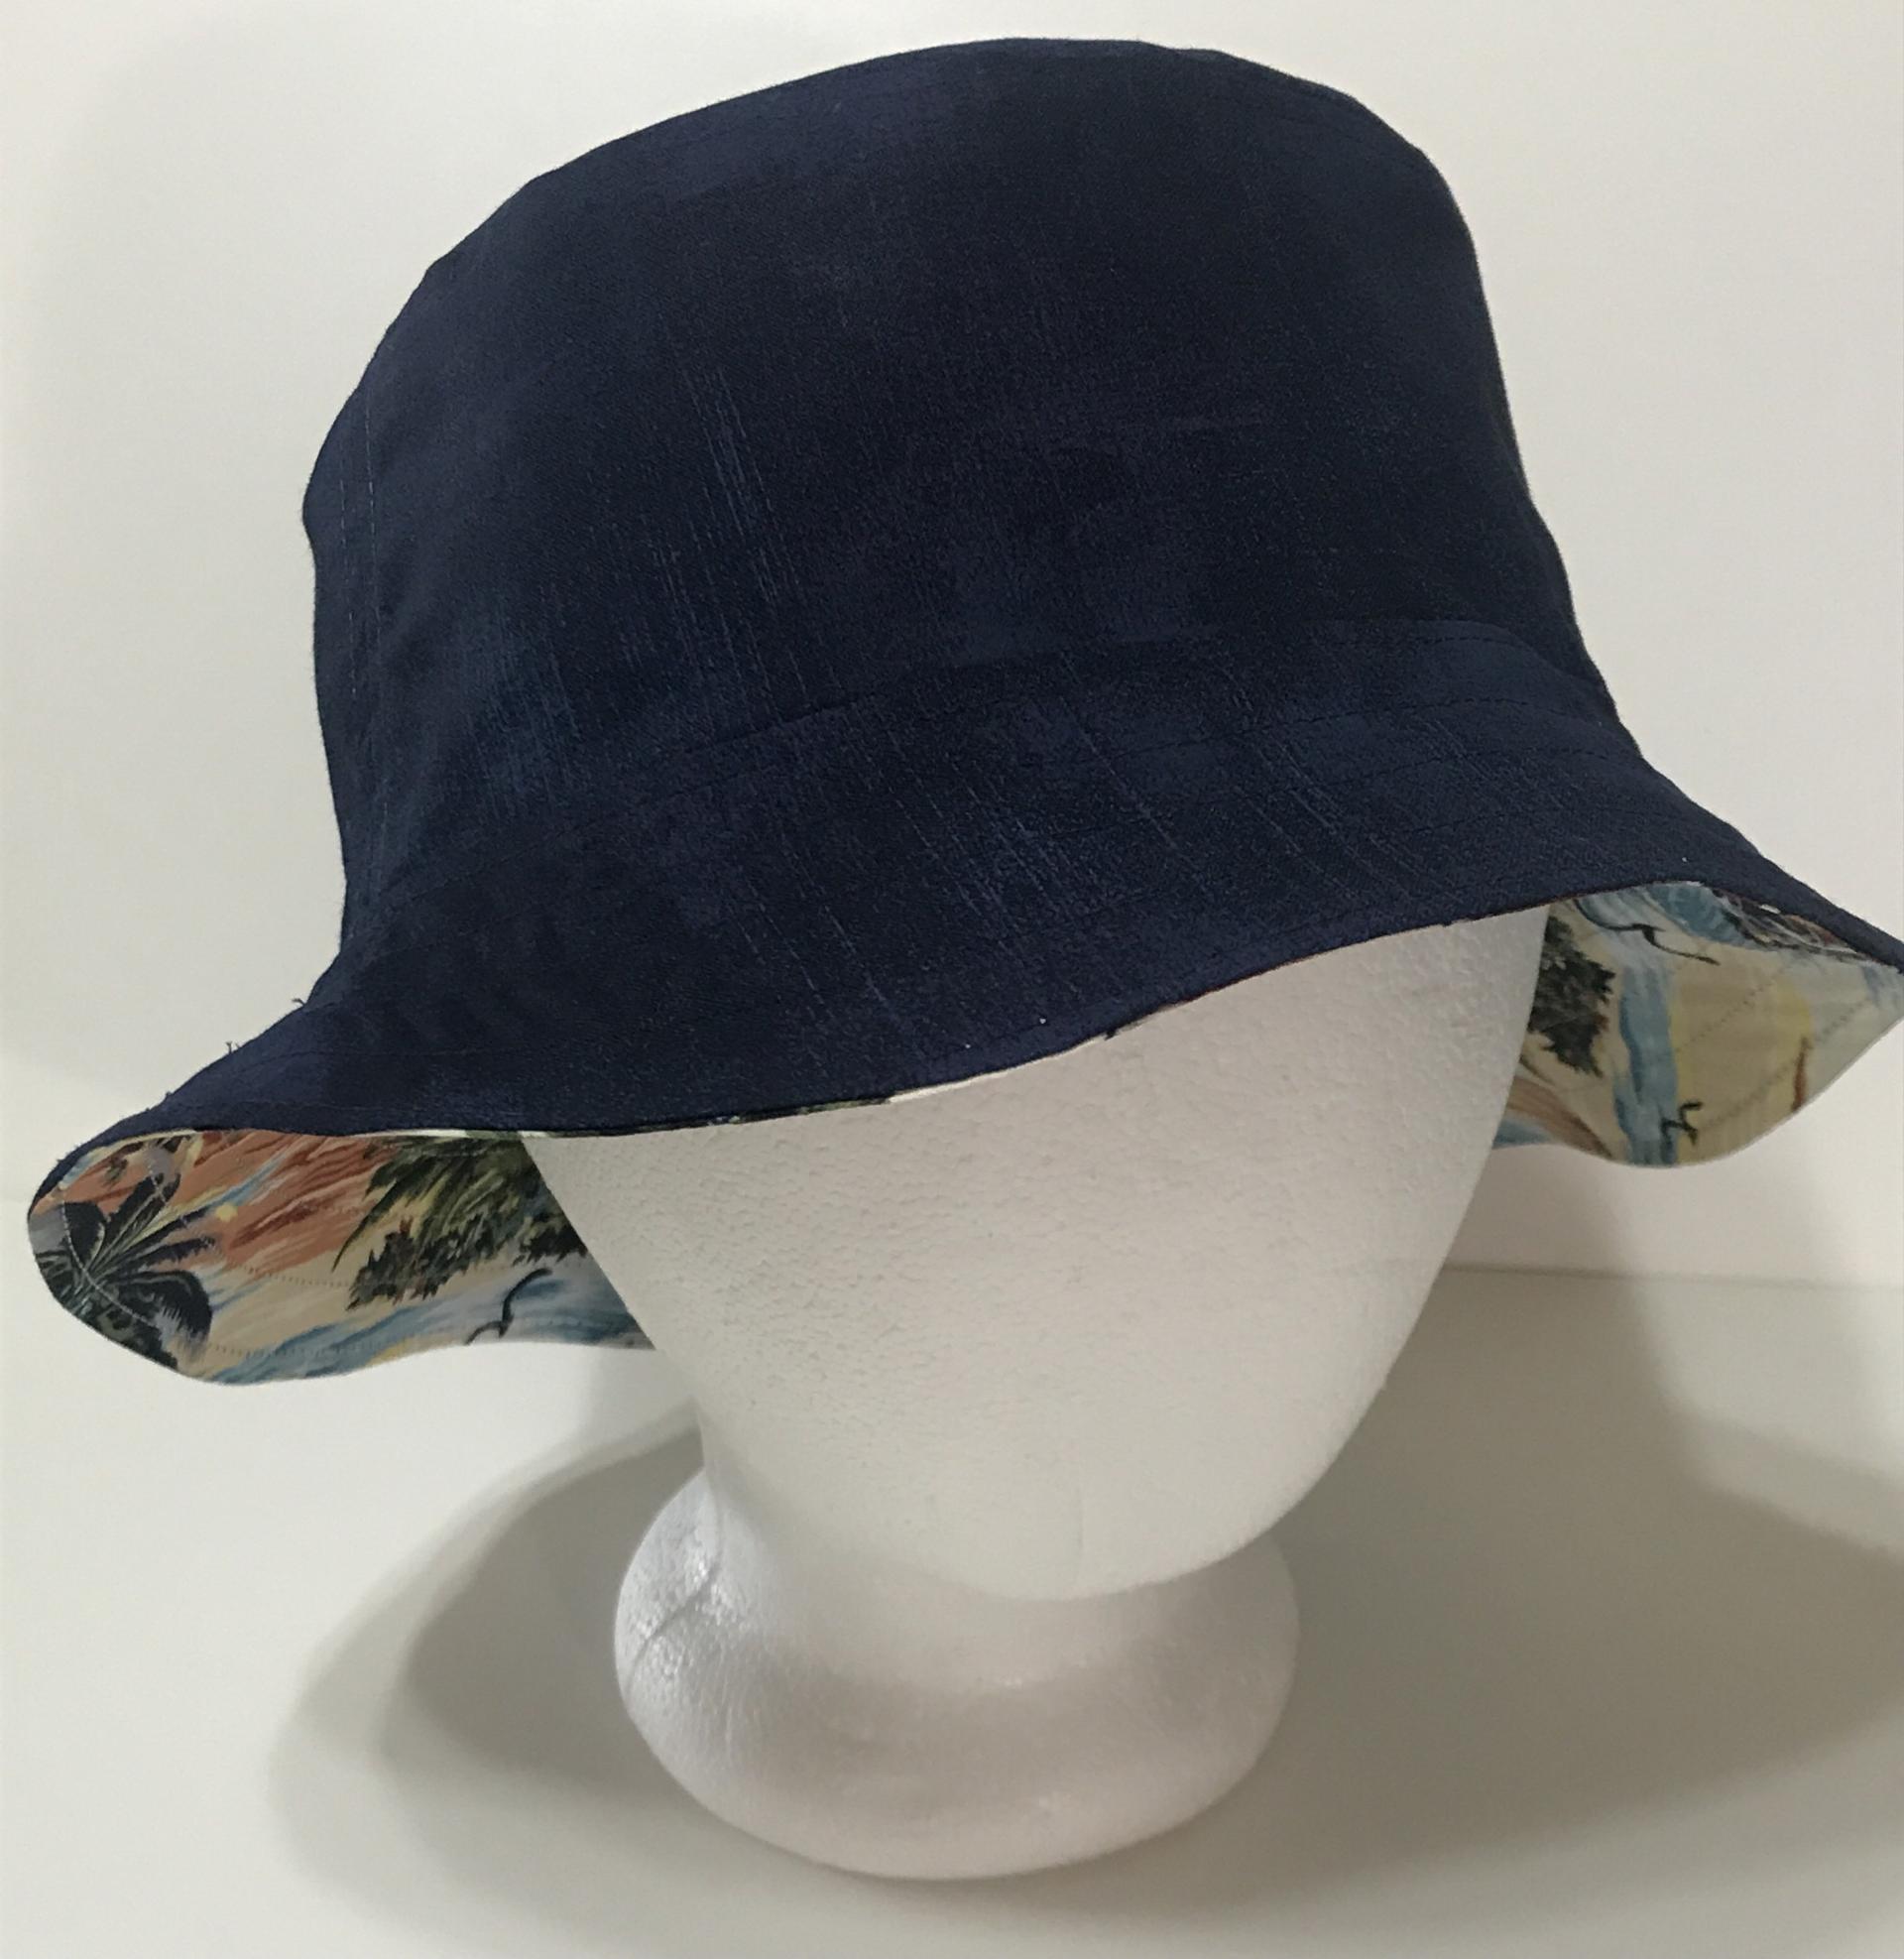 Tropical Theme Bucket Hat, Palm Trees, Sizes S-XXL, floppy hat, fishing hat, sun hat, casual hat, beach hat, Hawaiian resort cruise vacation hat